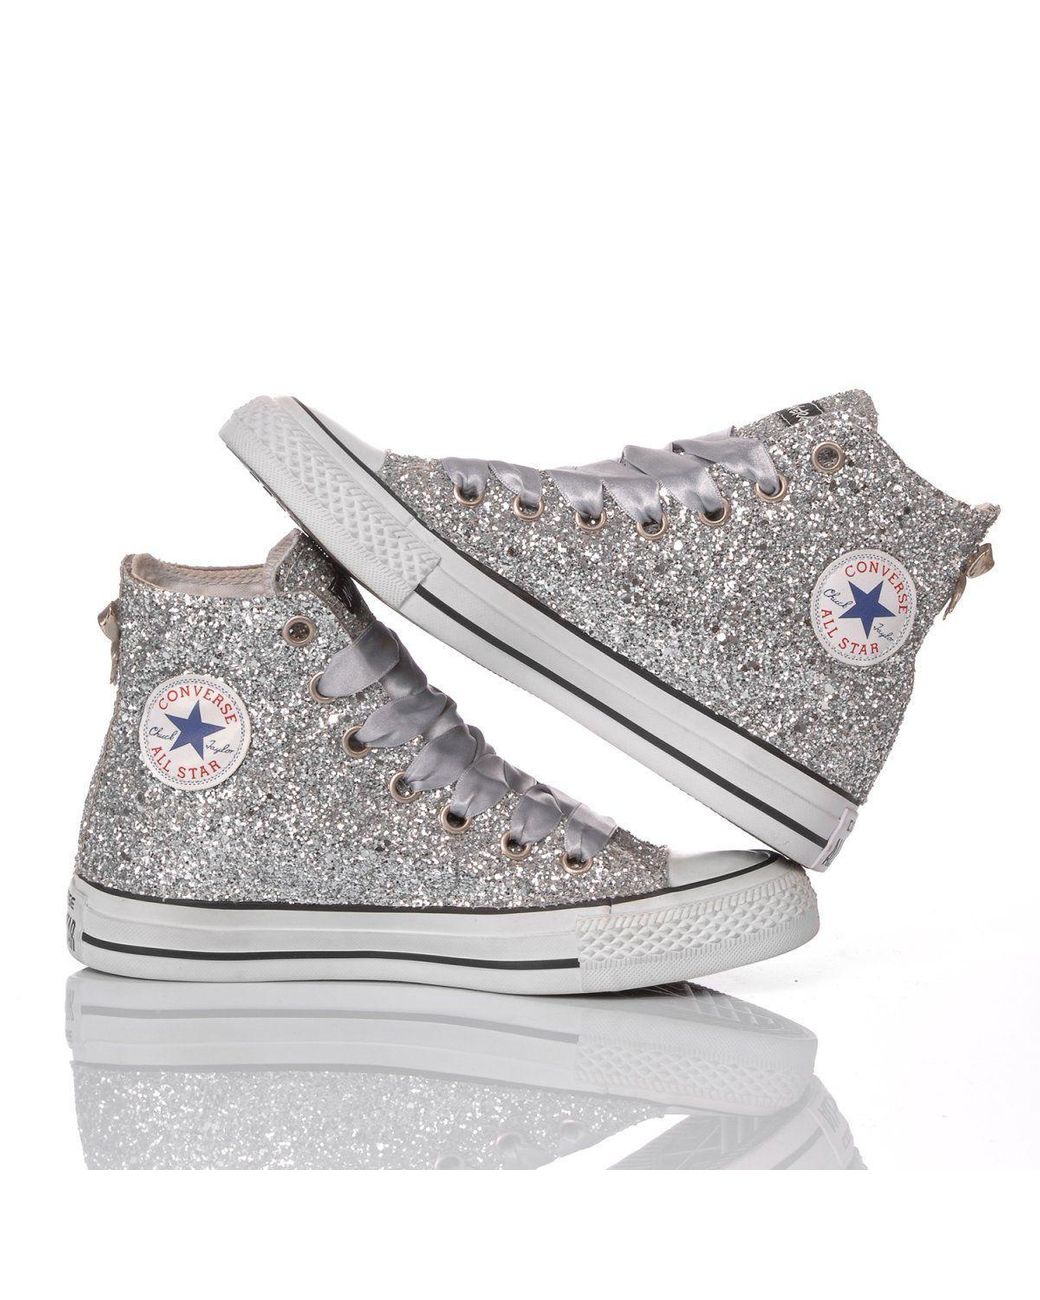 Converse Glitter Hi Top Sneakers in Silver (Metallic) - Save 31% | Lyst